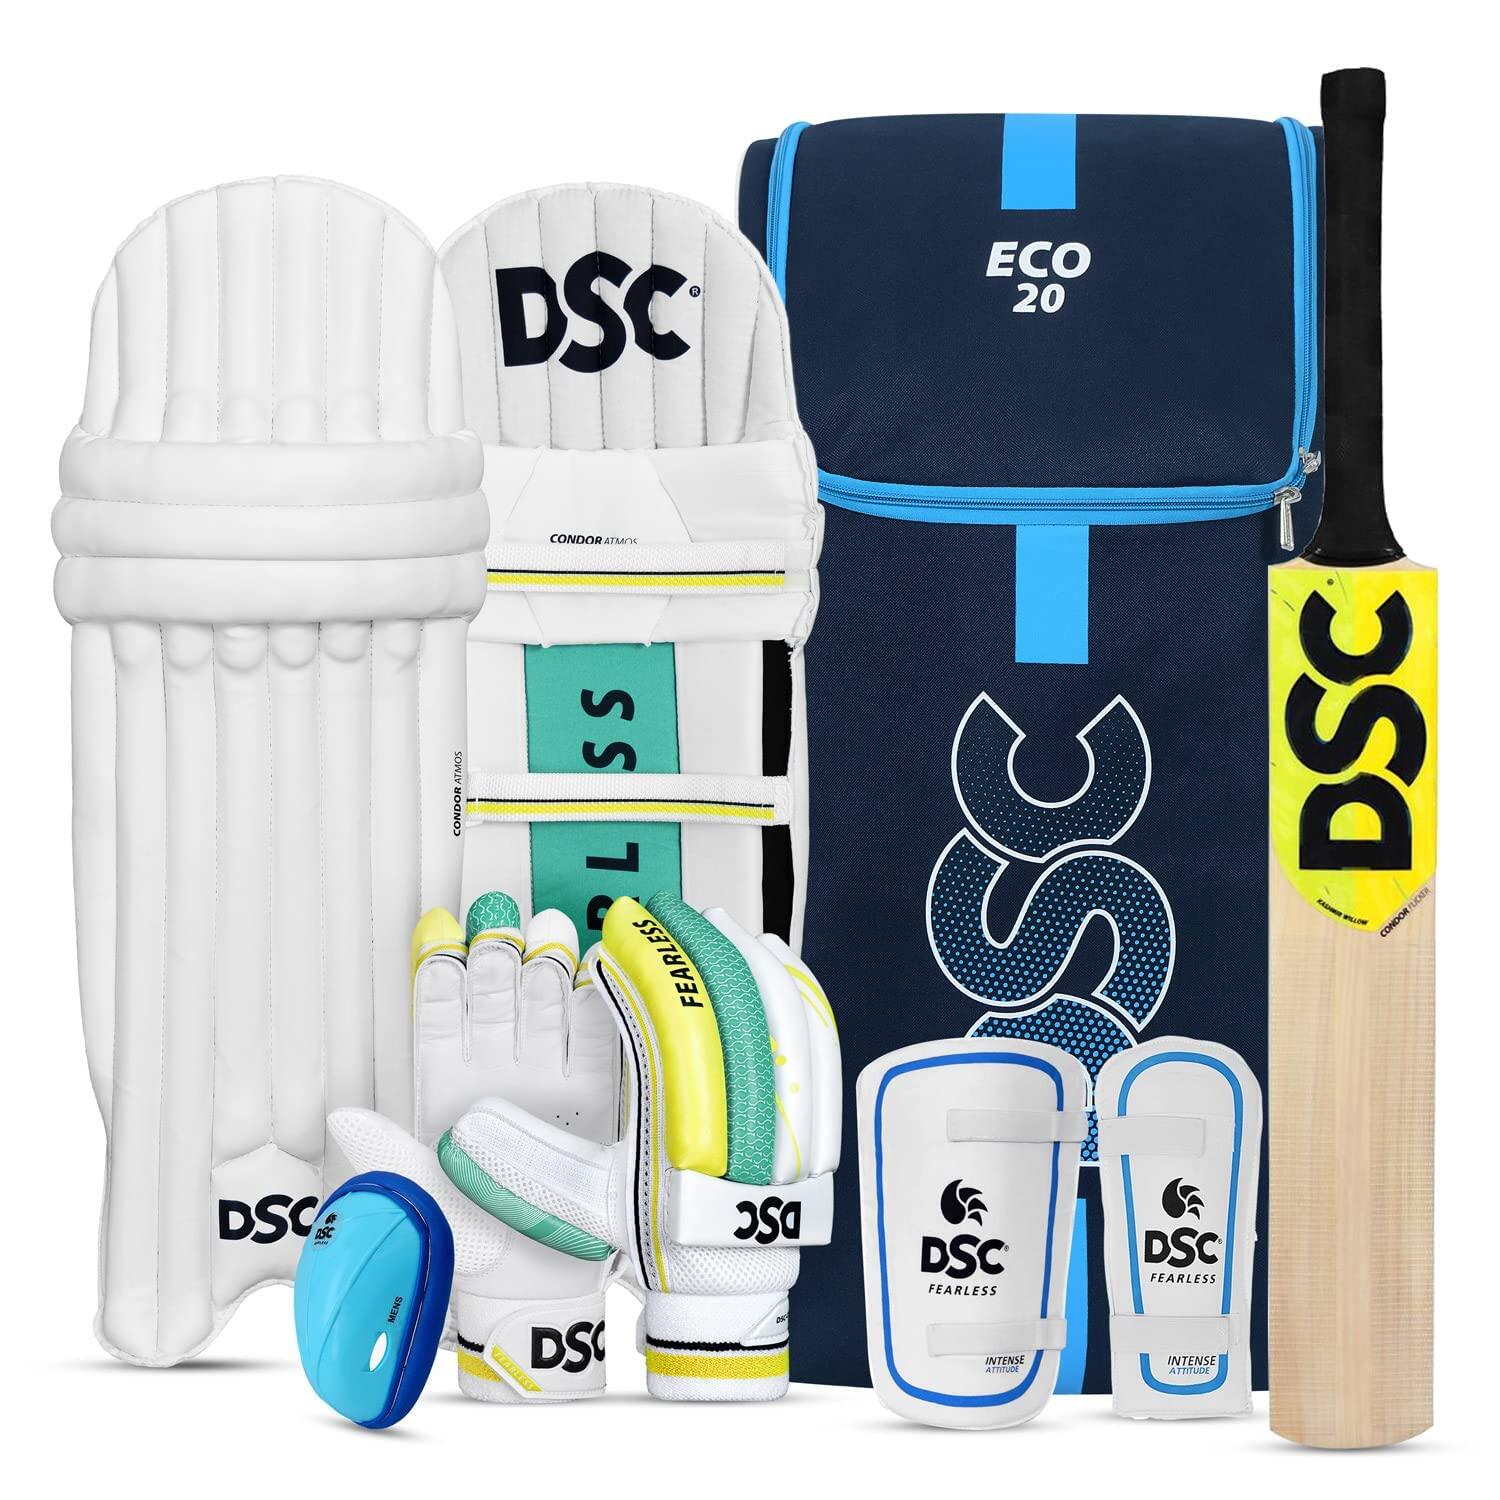 DSC DSC Economy Kashmir Willow Cricket Kit